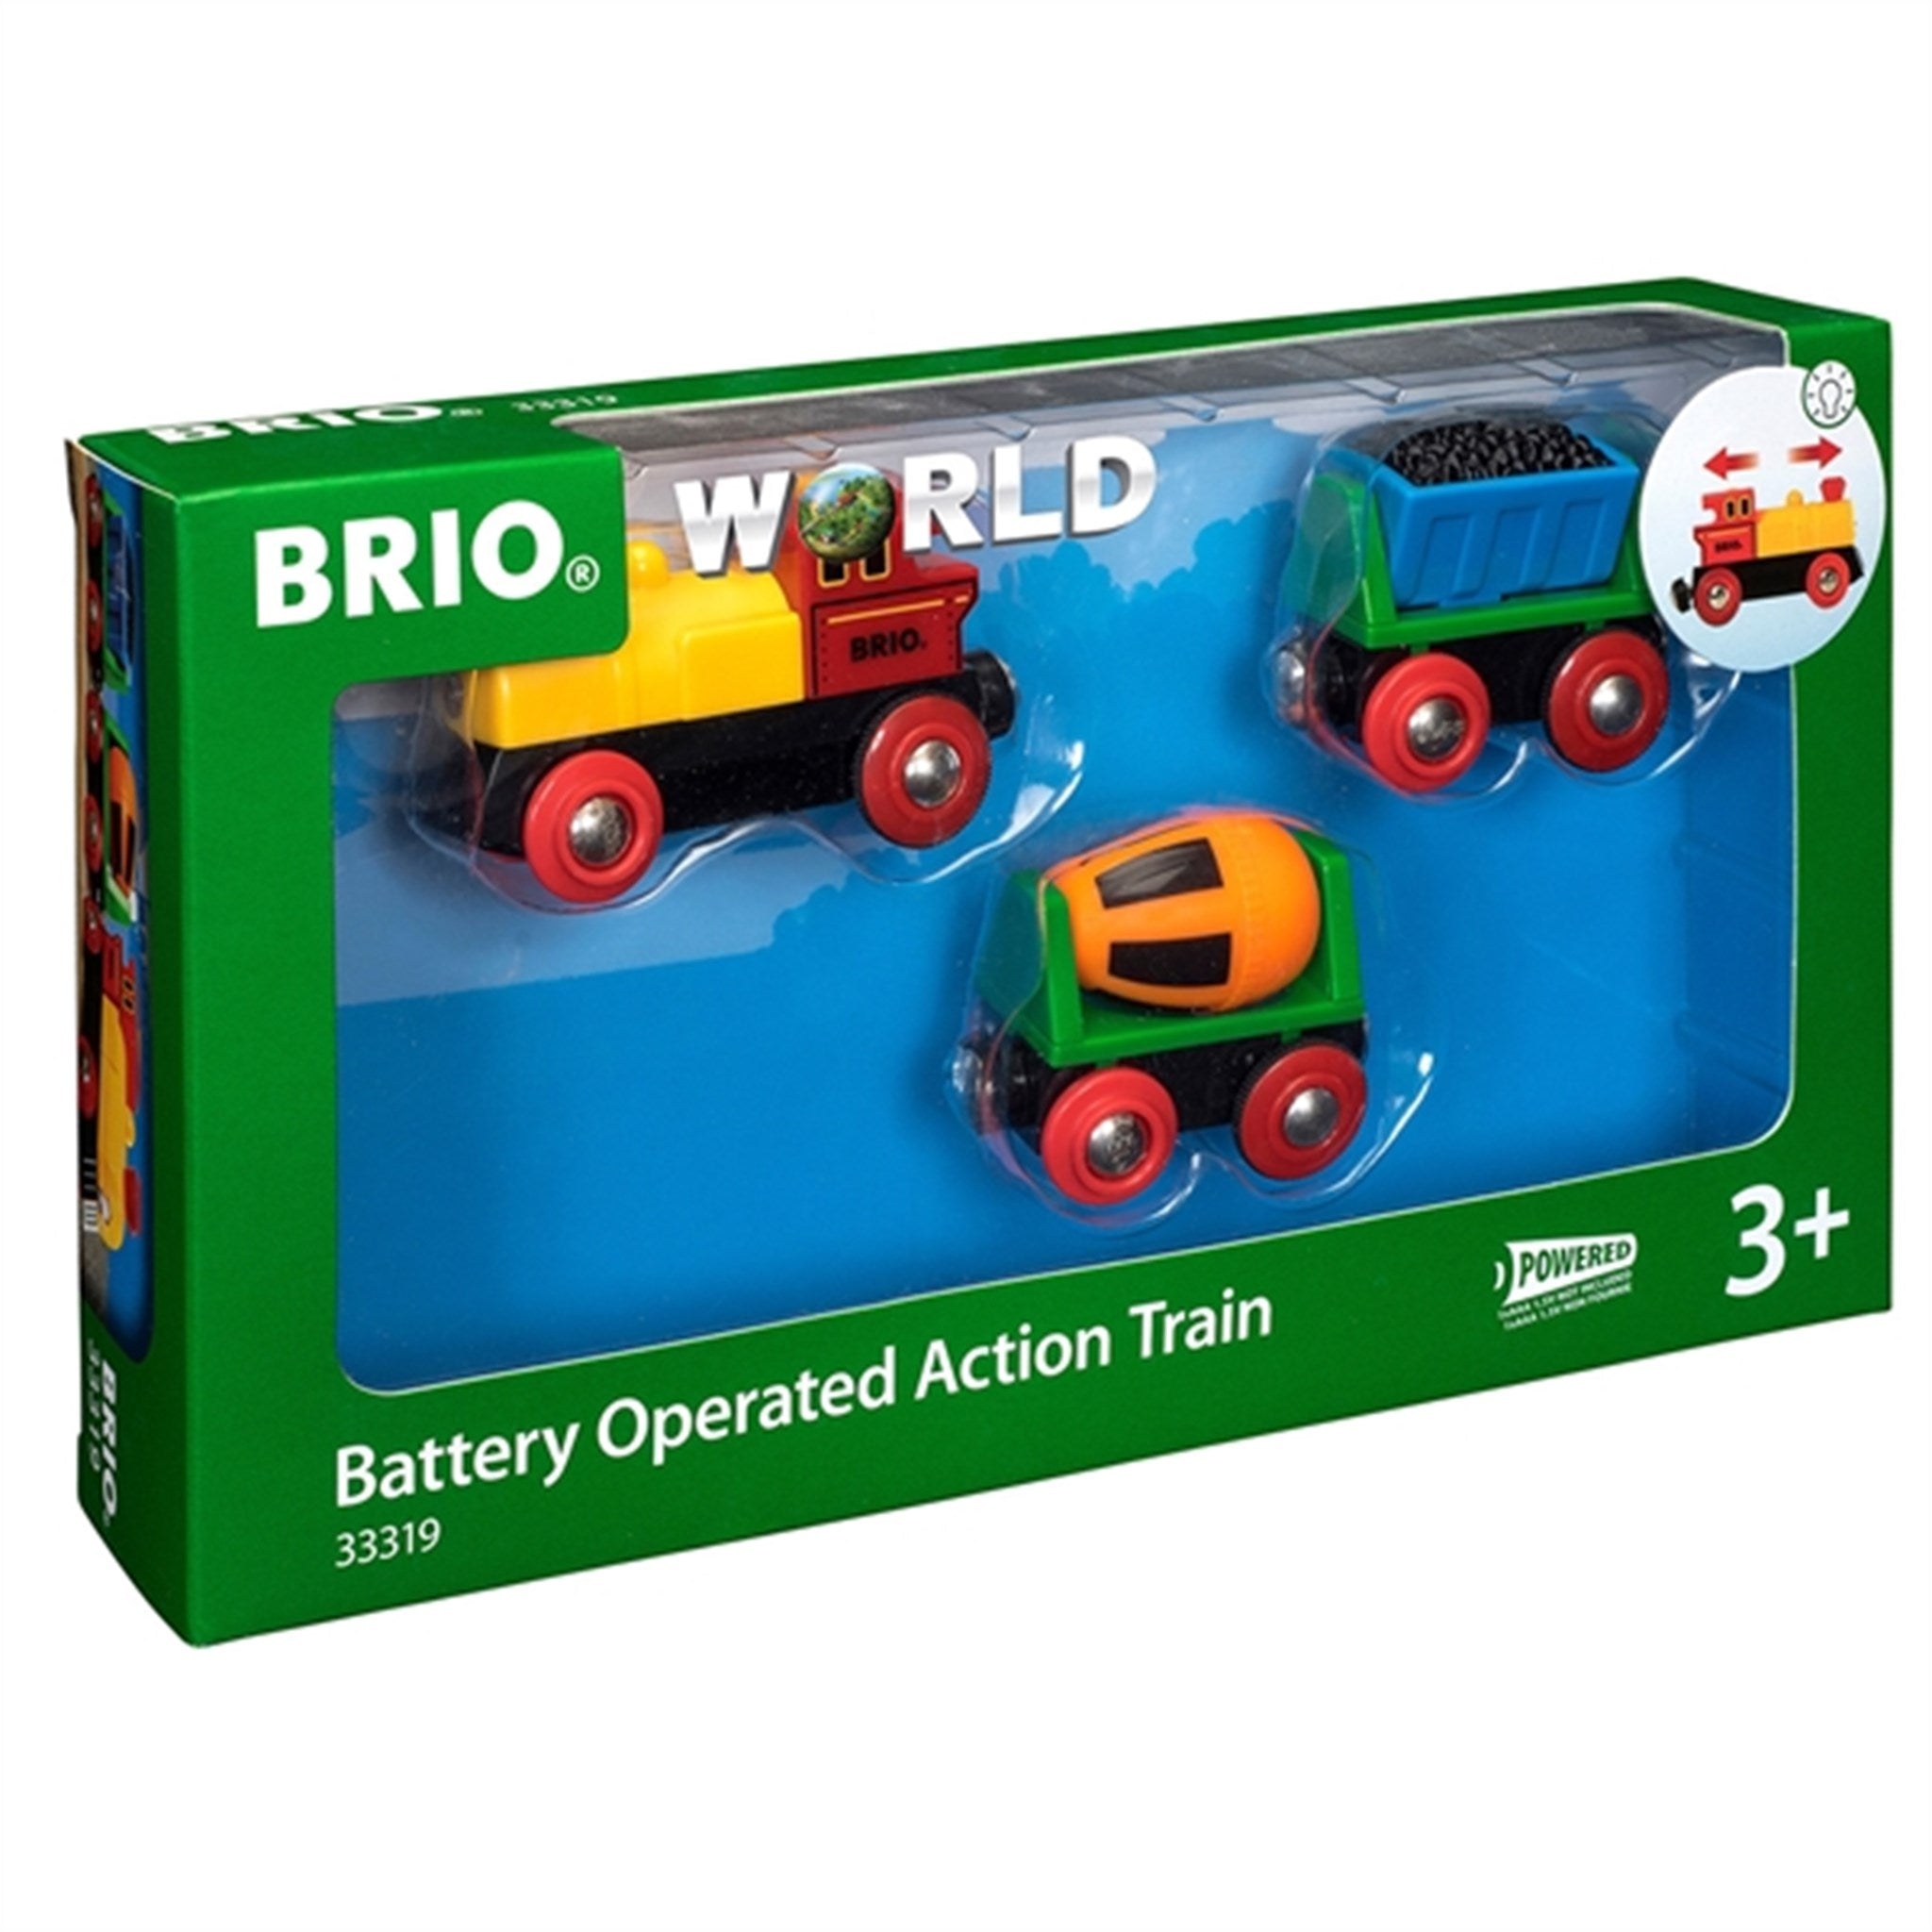 BRIO® Battery Action Train 2